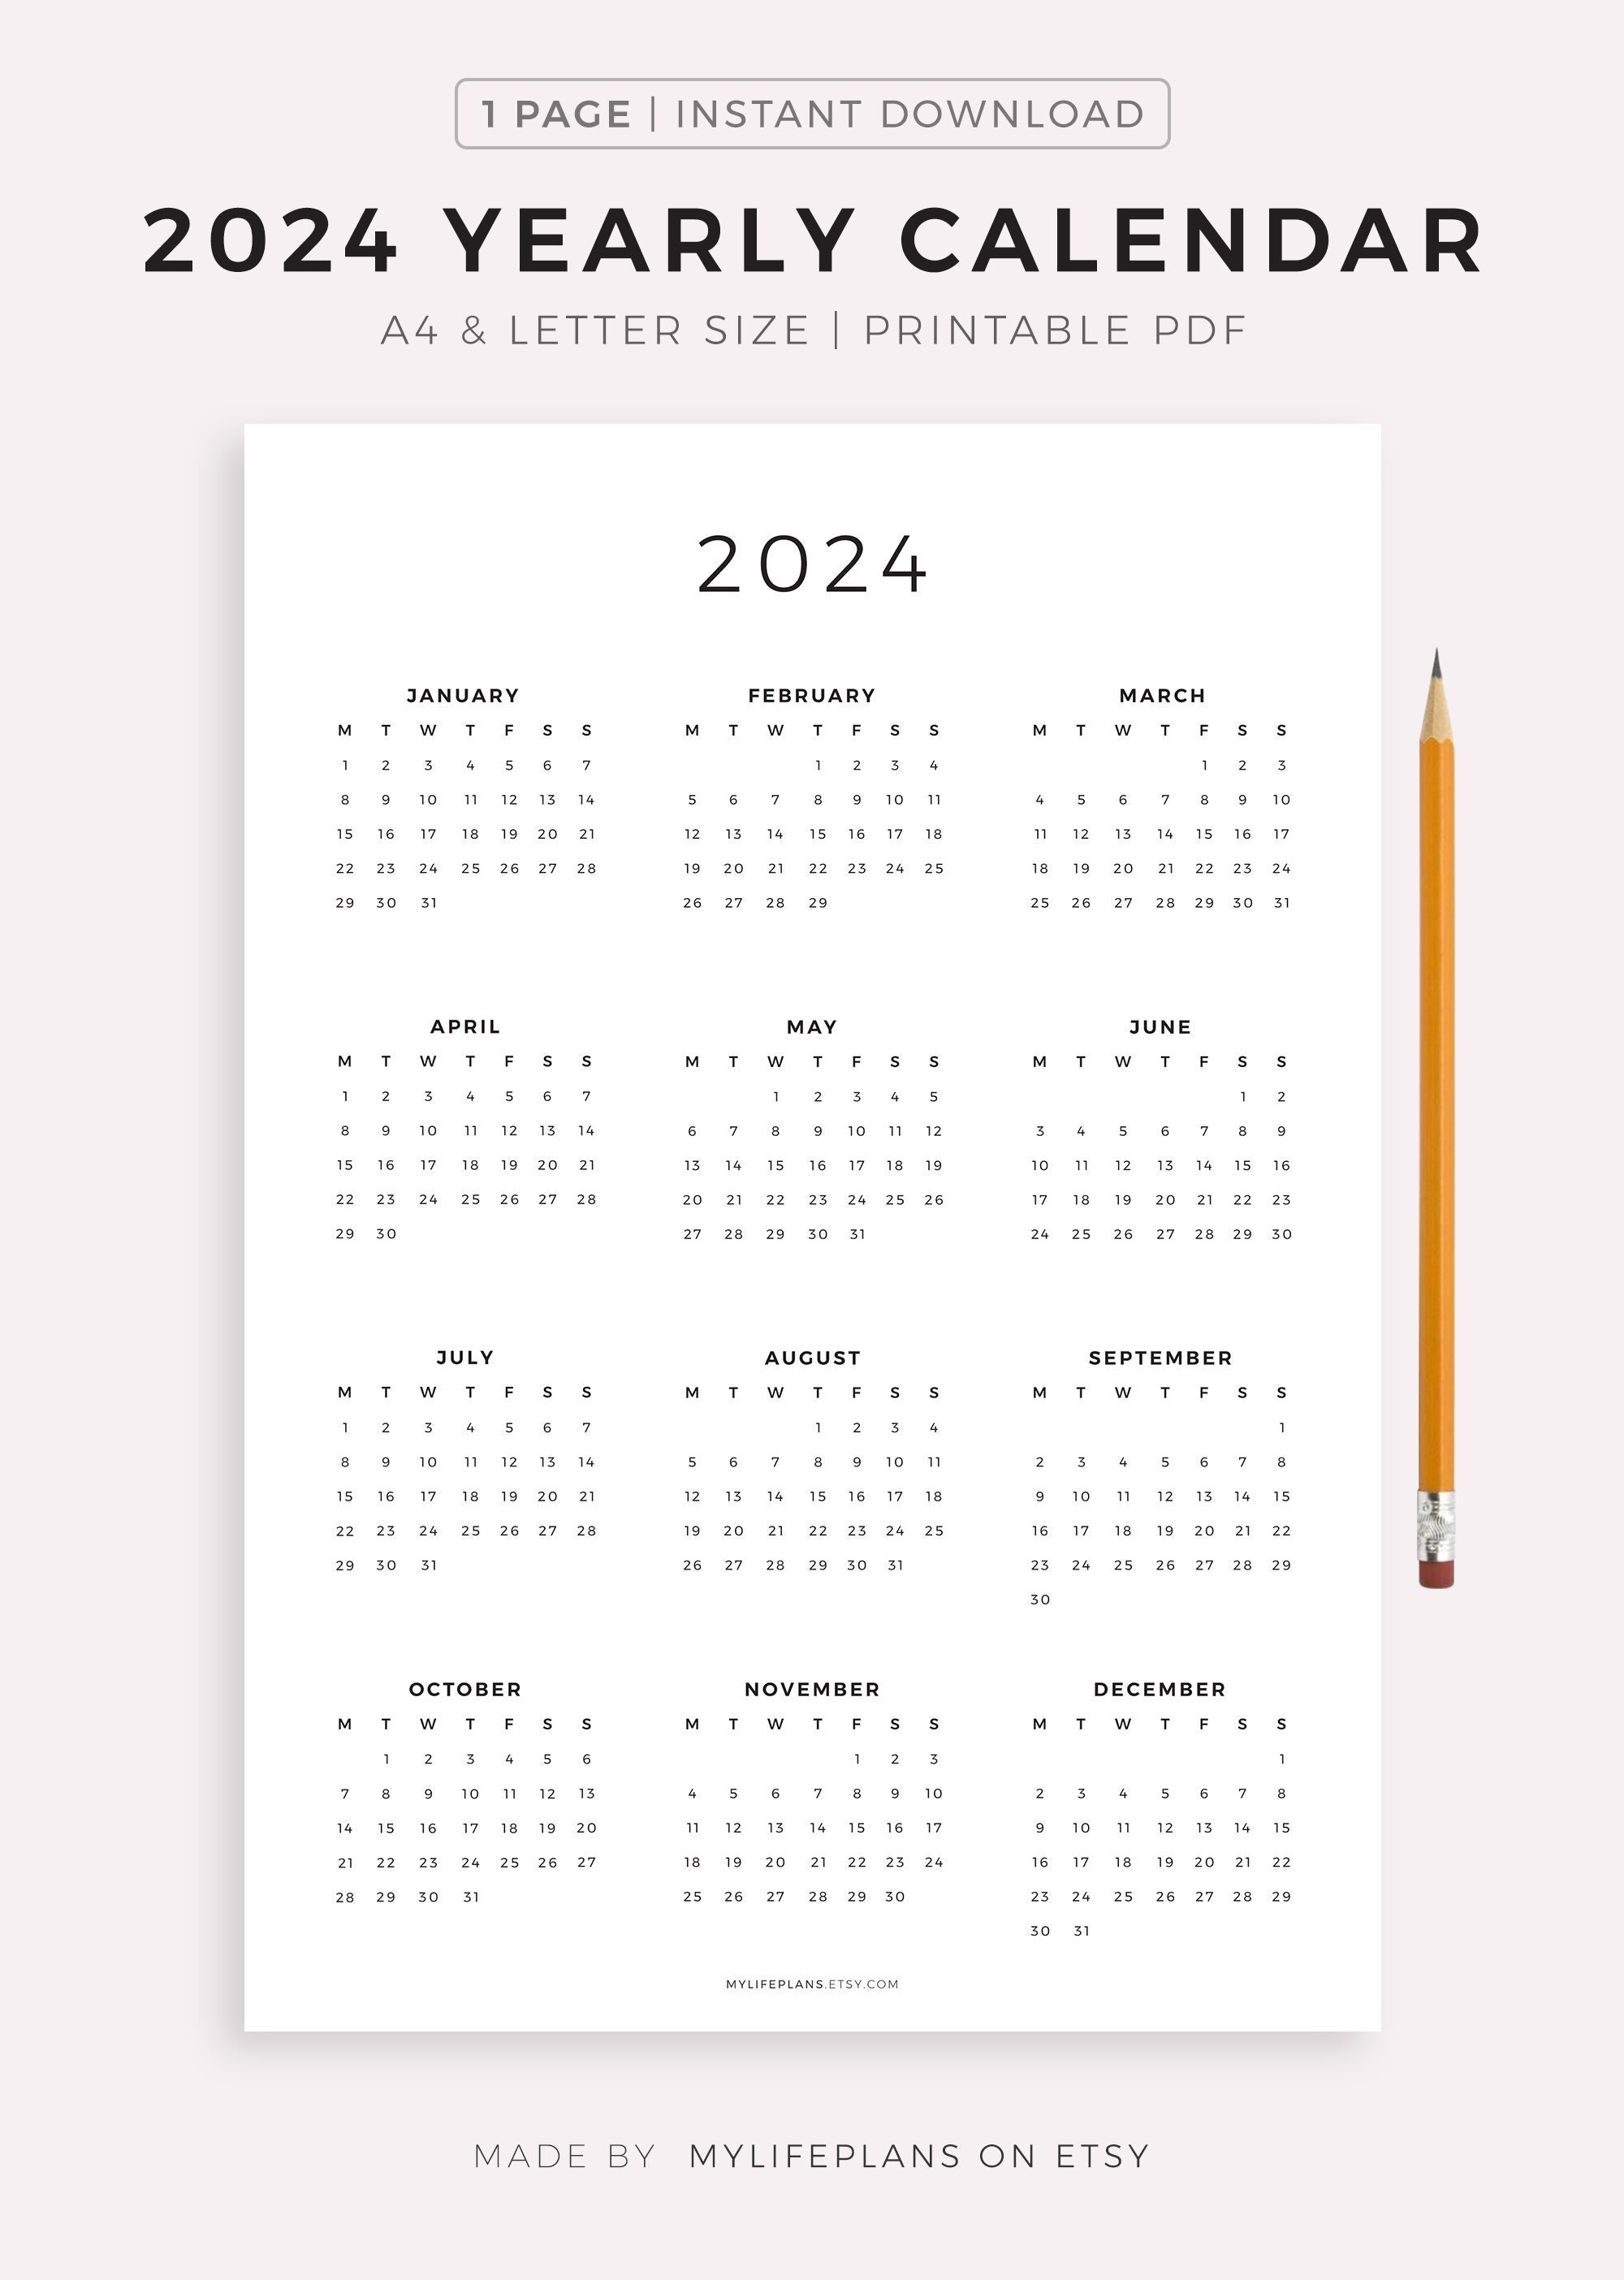 2024 Yearly Calendar Calendar Cards Scrapbook Calendar 